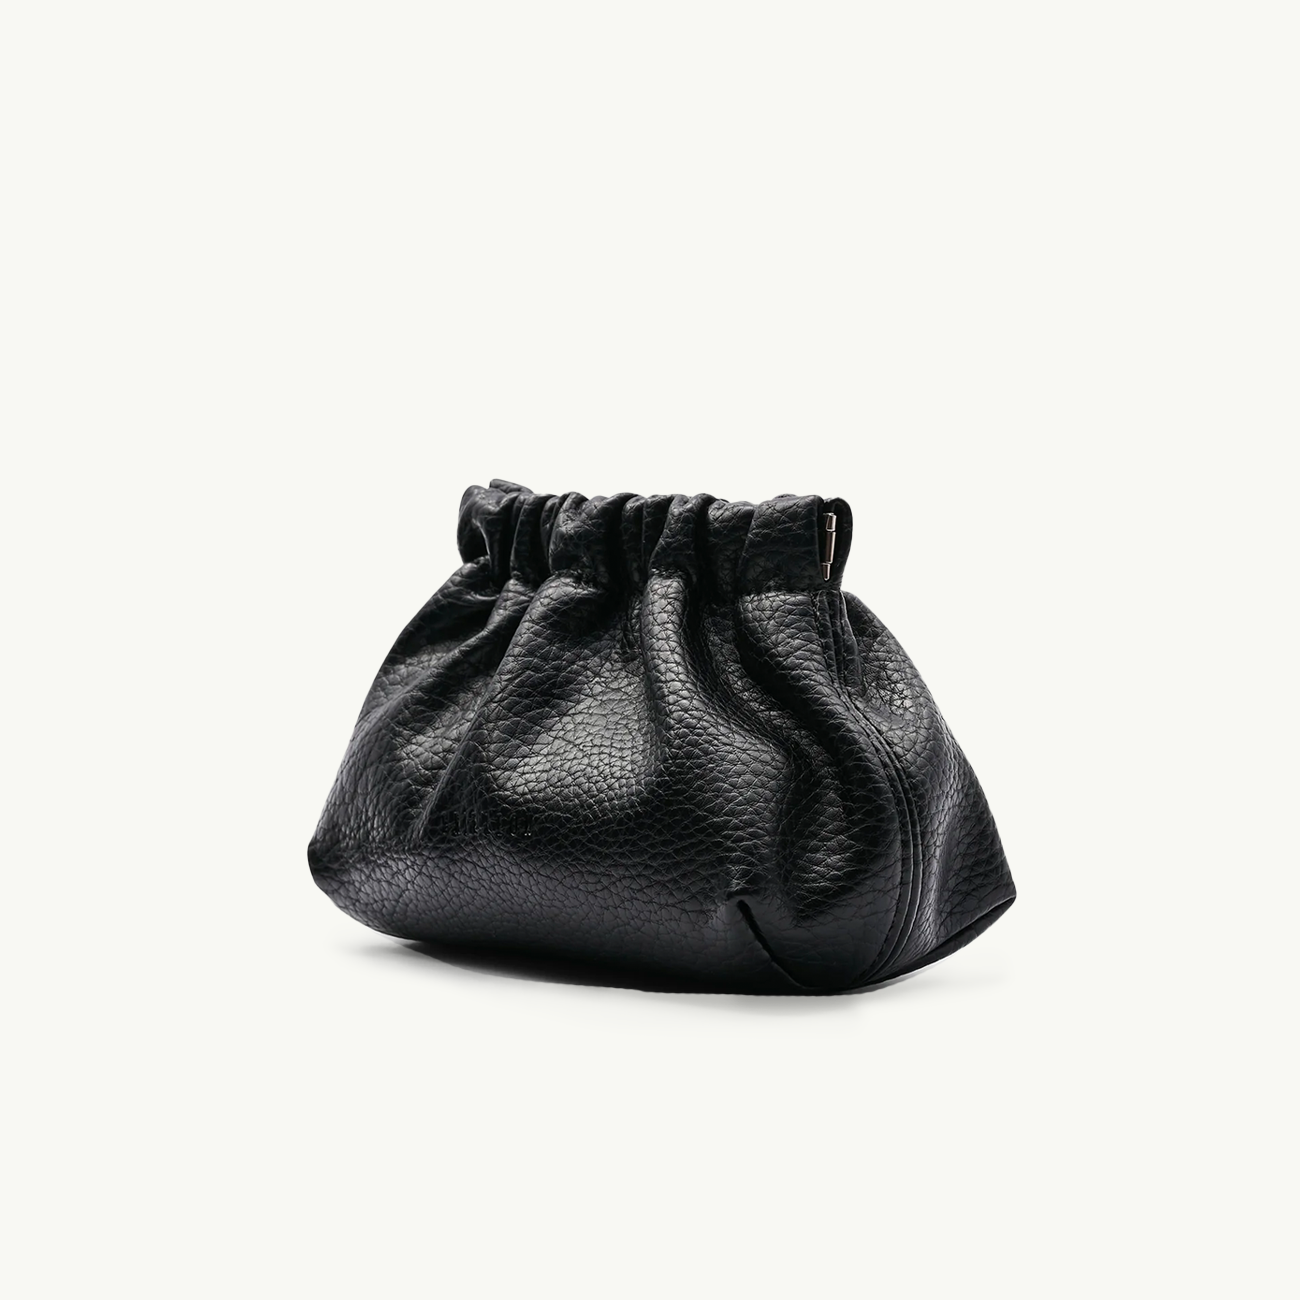 Alma Bag Mini - Black Nappa